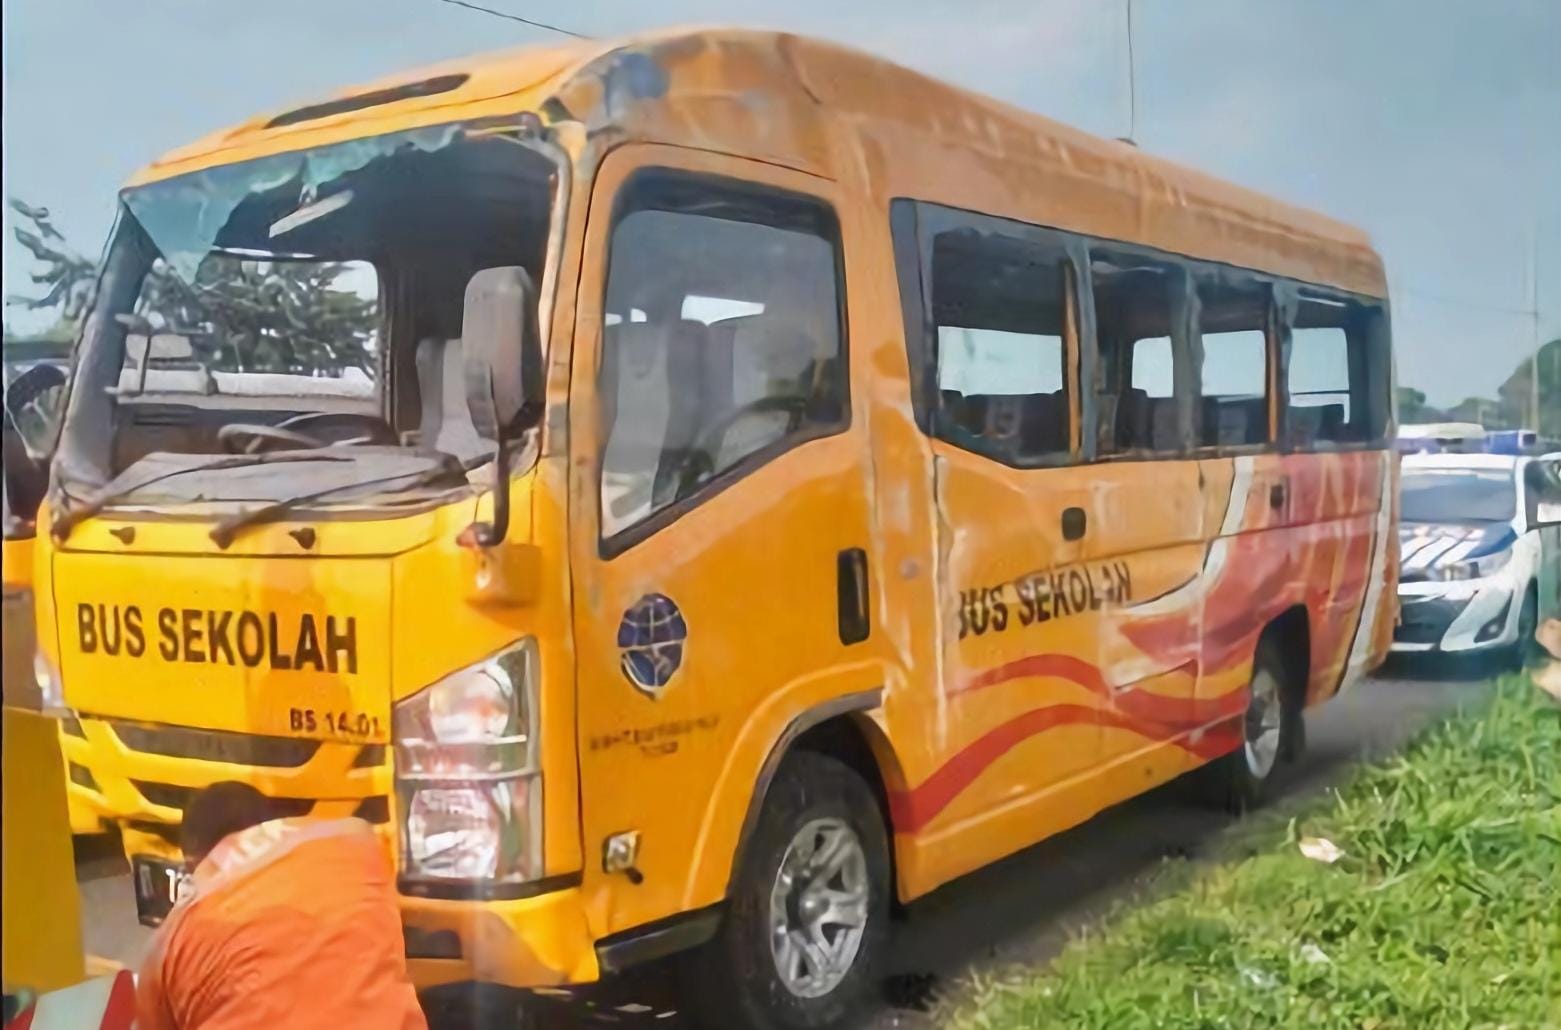 Bus Sekolah bertuliskan Kementerian Perhubungan mengalami laka lantas di Tol Purbaleunyi KM 147 Jalur B, Kabupaten Bandung. (Istimewa)